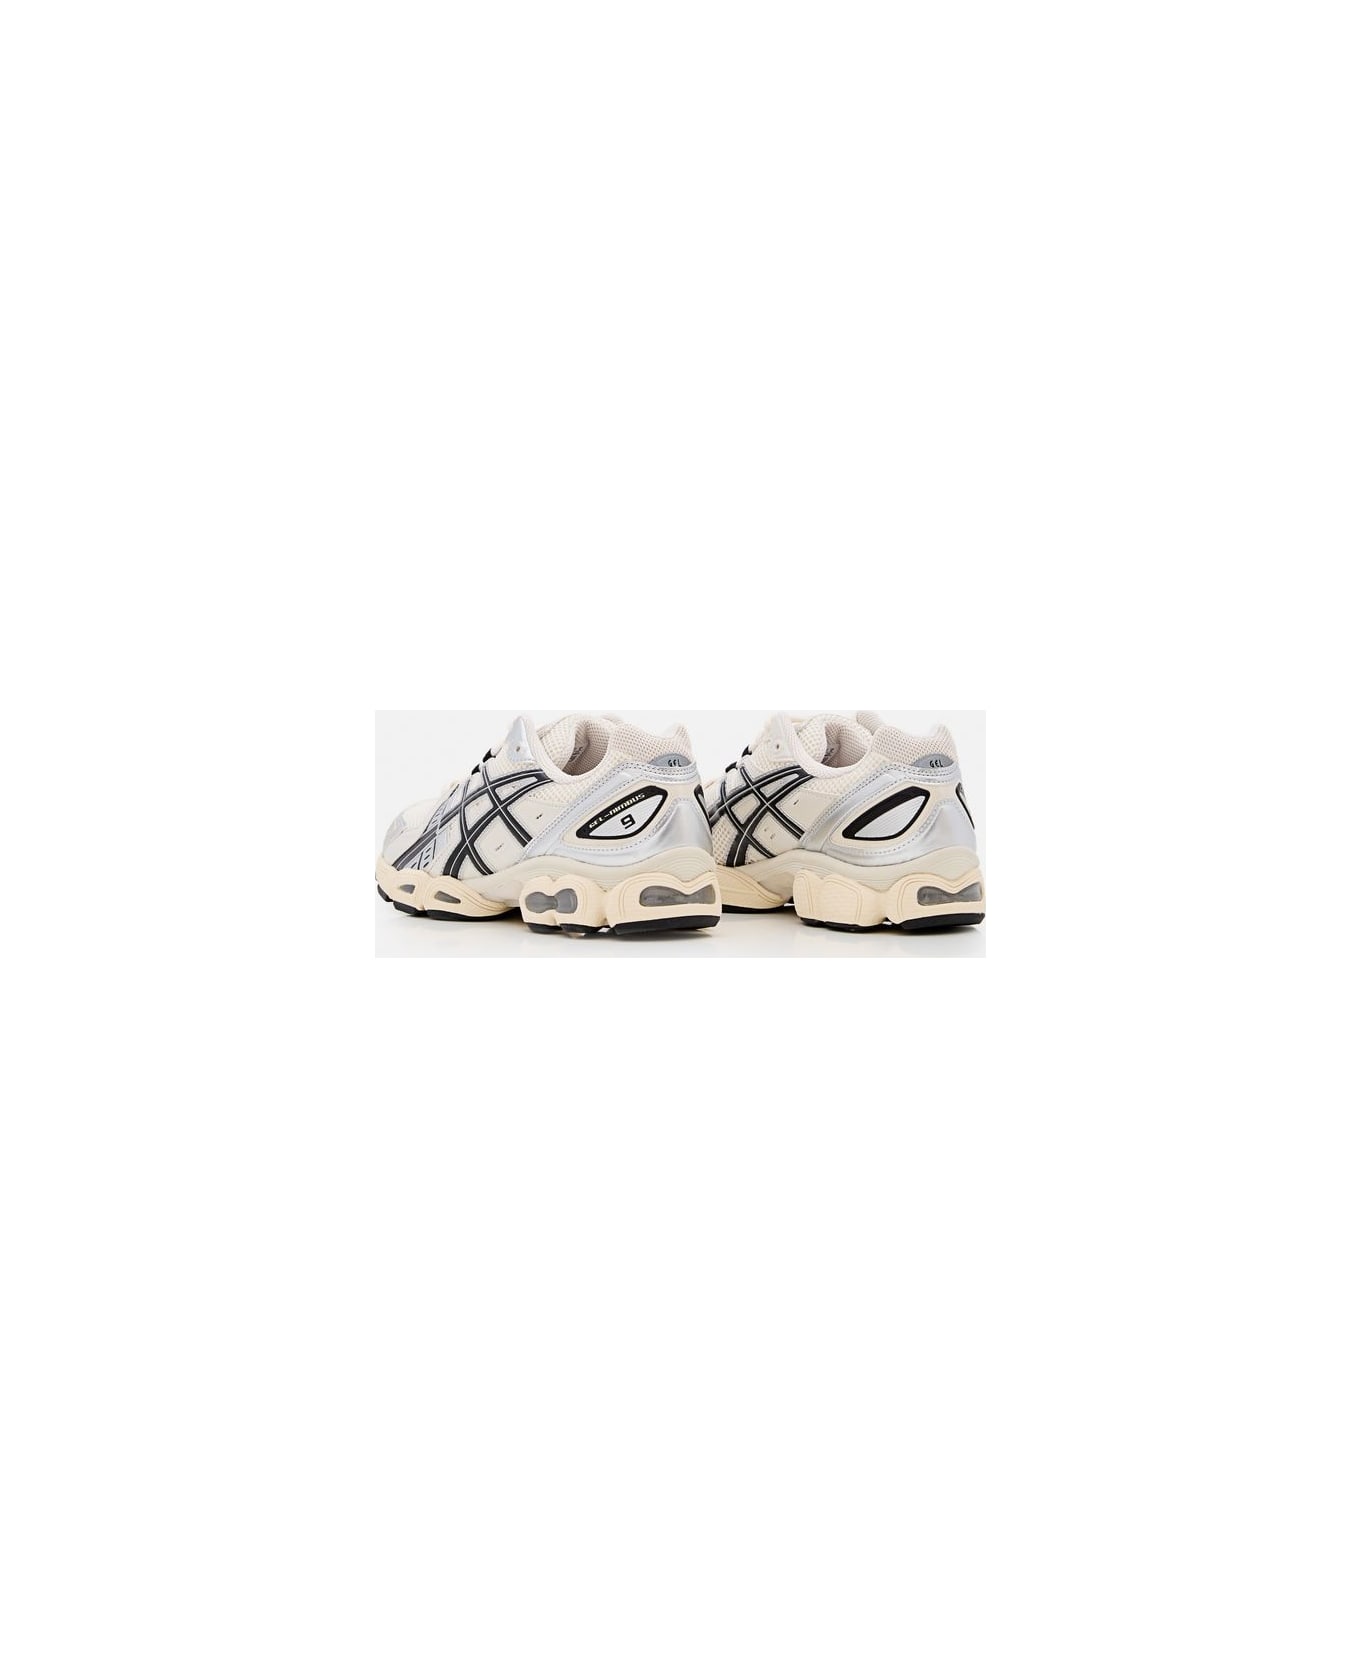 Asics Gel Nimbus 9 Sneakers - White